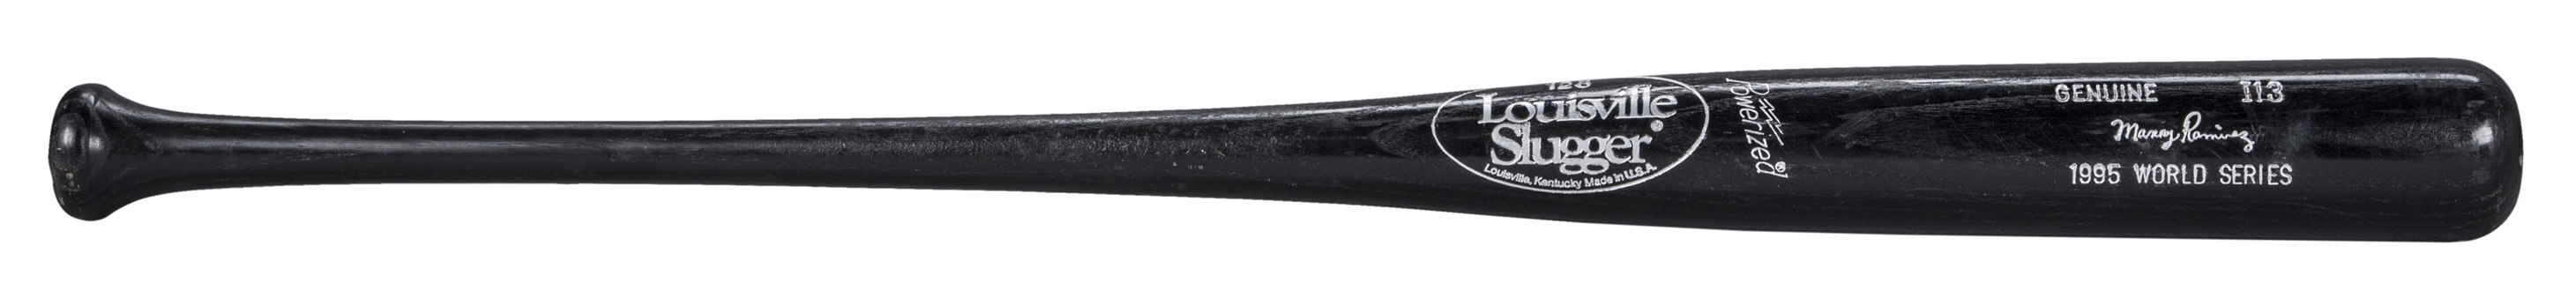 1995 Manny Ramirez Cleveland Indians Game Used World Series Louisville Slugger II3 Model Bat (PSA/DNA)